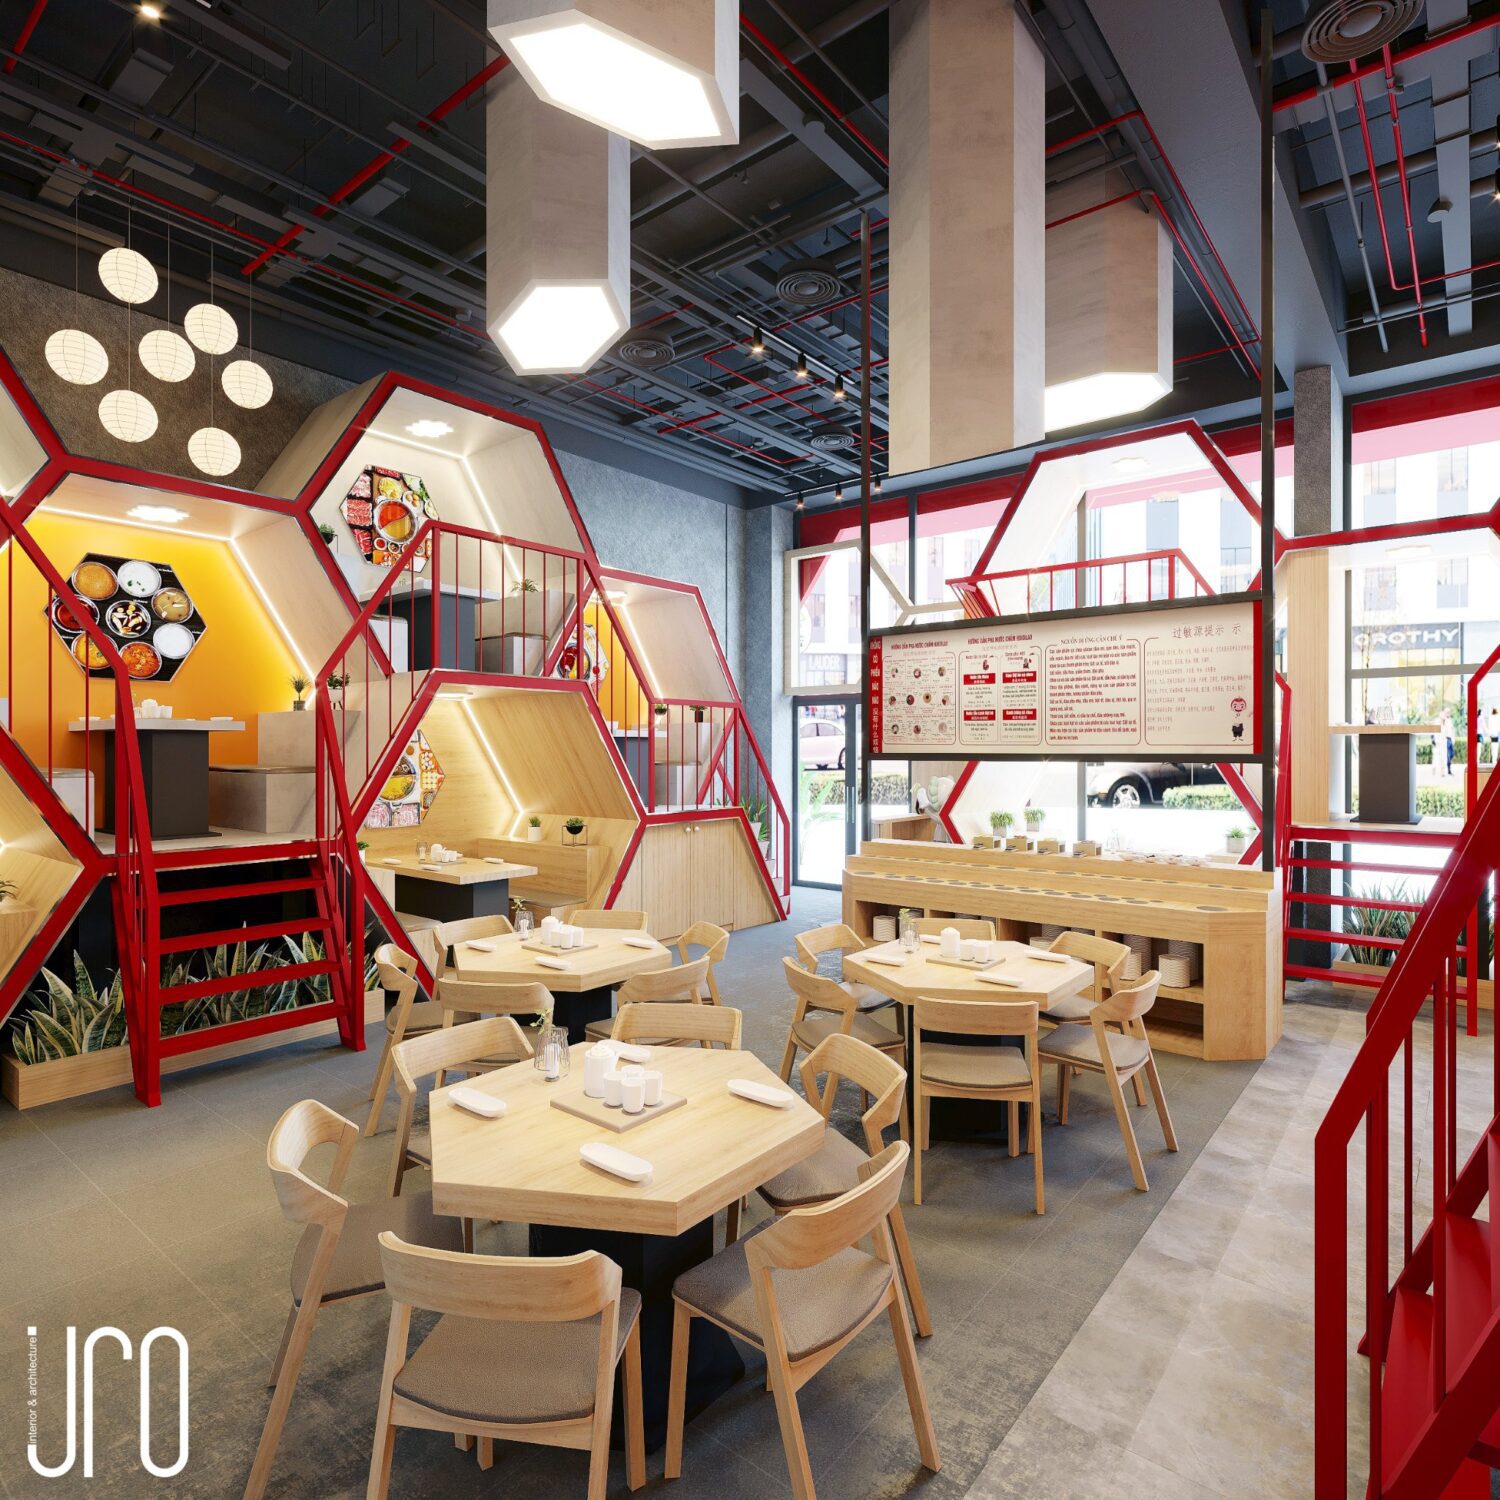 12529. Download Free 3D Restaurant Interior Model by Bi Dao